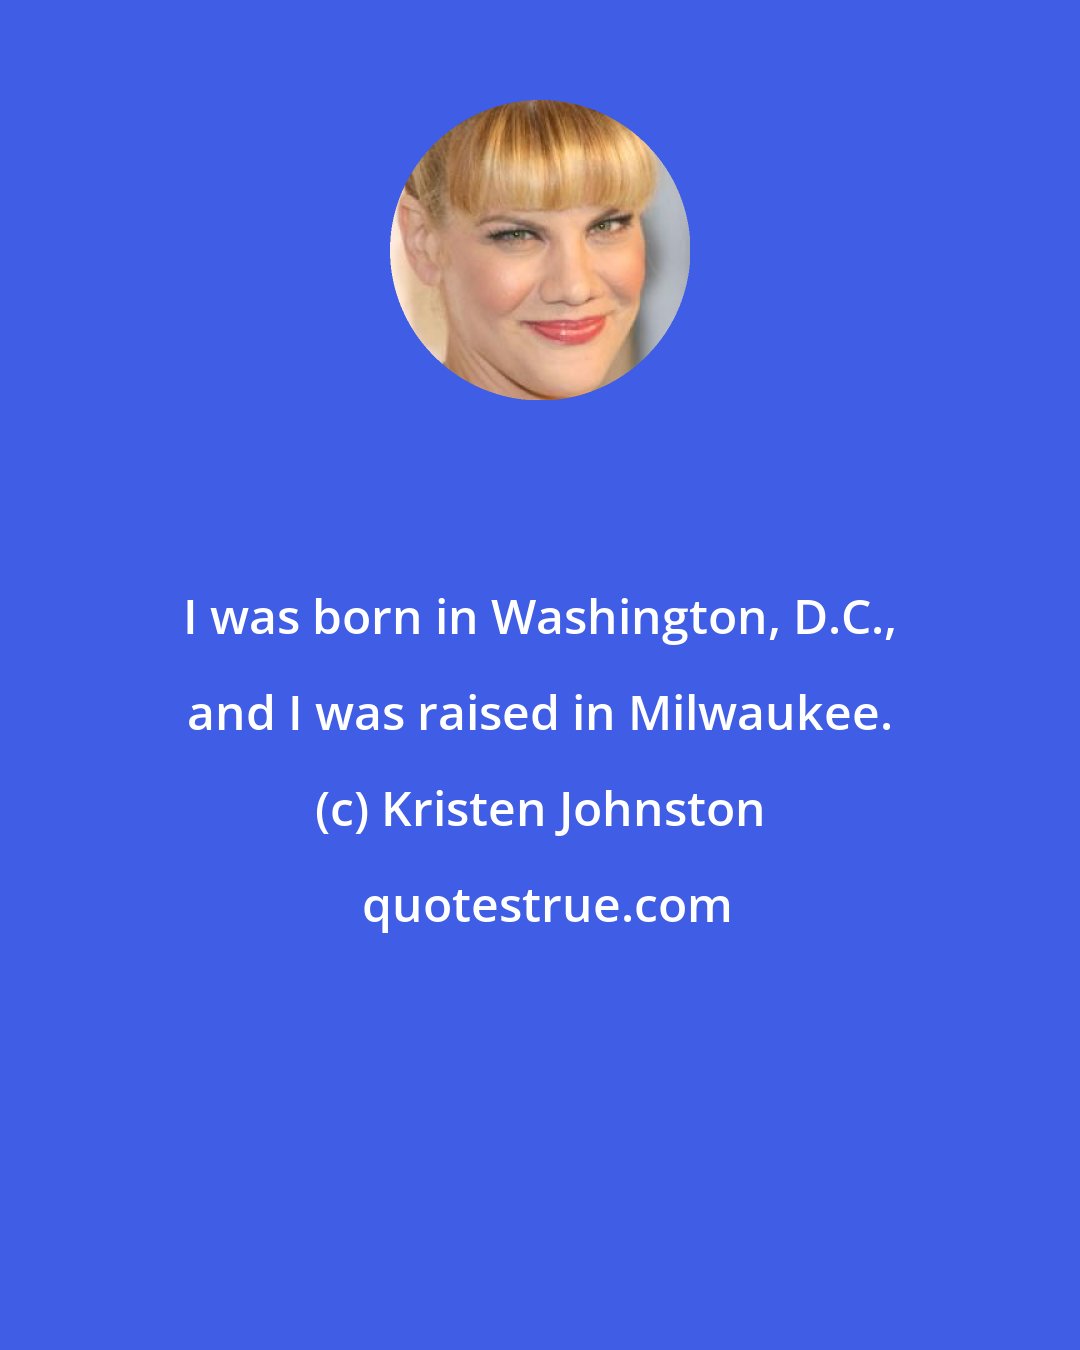 Kristen Johnston: I was born in Washington, D.C., and I was raised in Milwaukee.